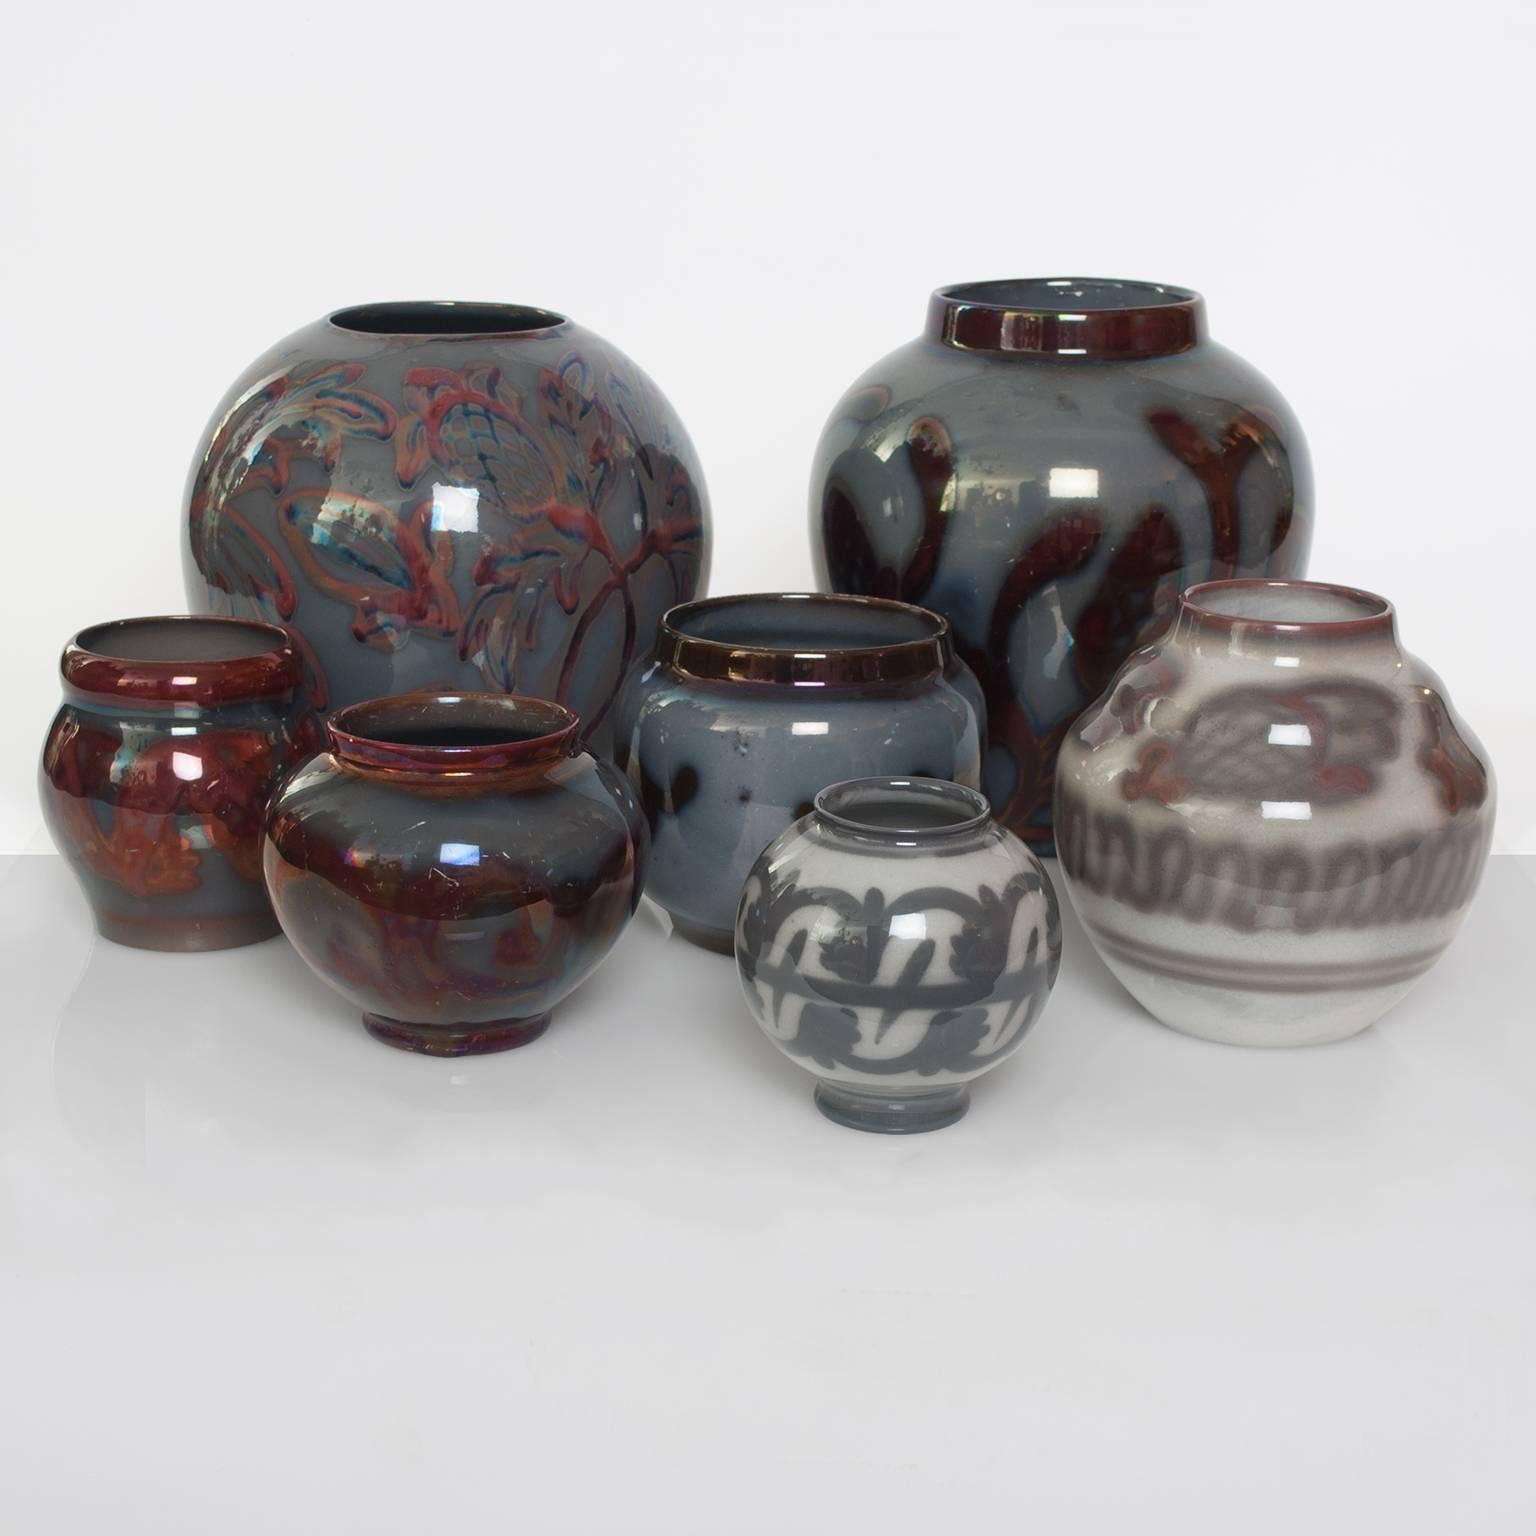 Group of 7 Art Deco luster glazed ceramic vases by Edgar Bockman for Hoganas Keramik, Sweden. 
Heights:  8.25